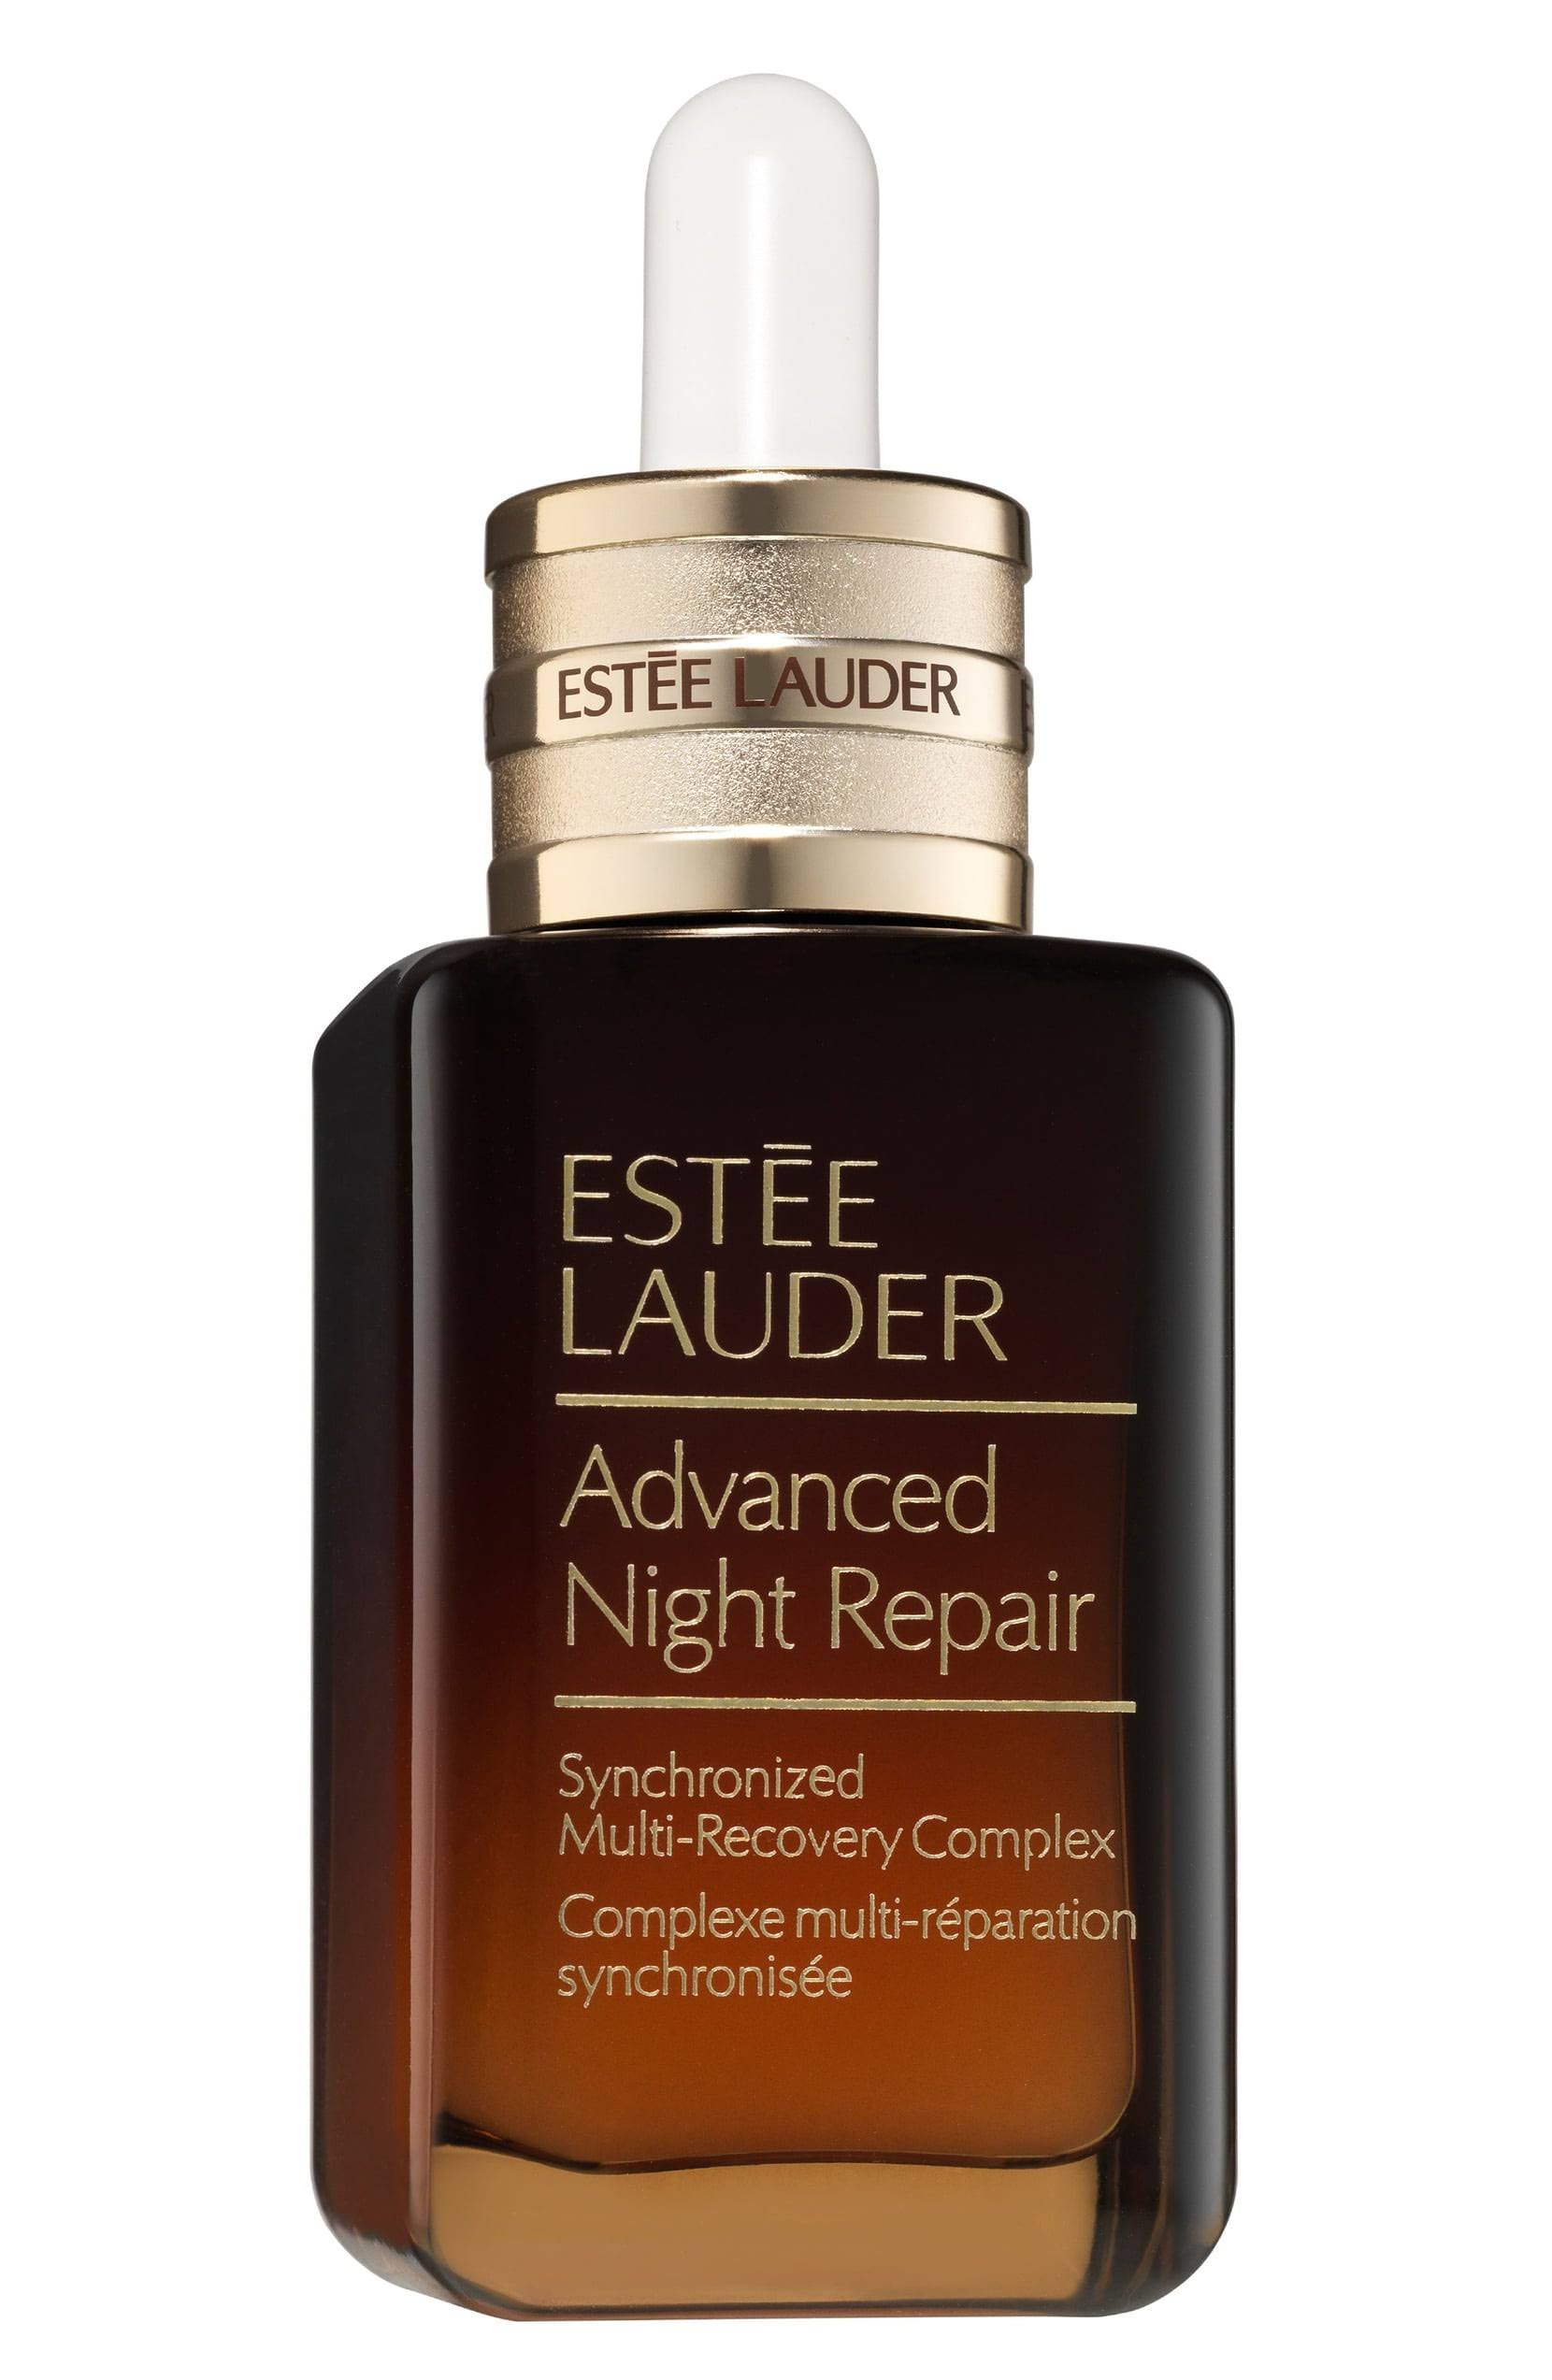 Estee Lauder Serum Advanced Night Repair Synchronized Multi-Recovery Complex 50ml